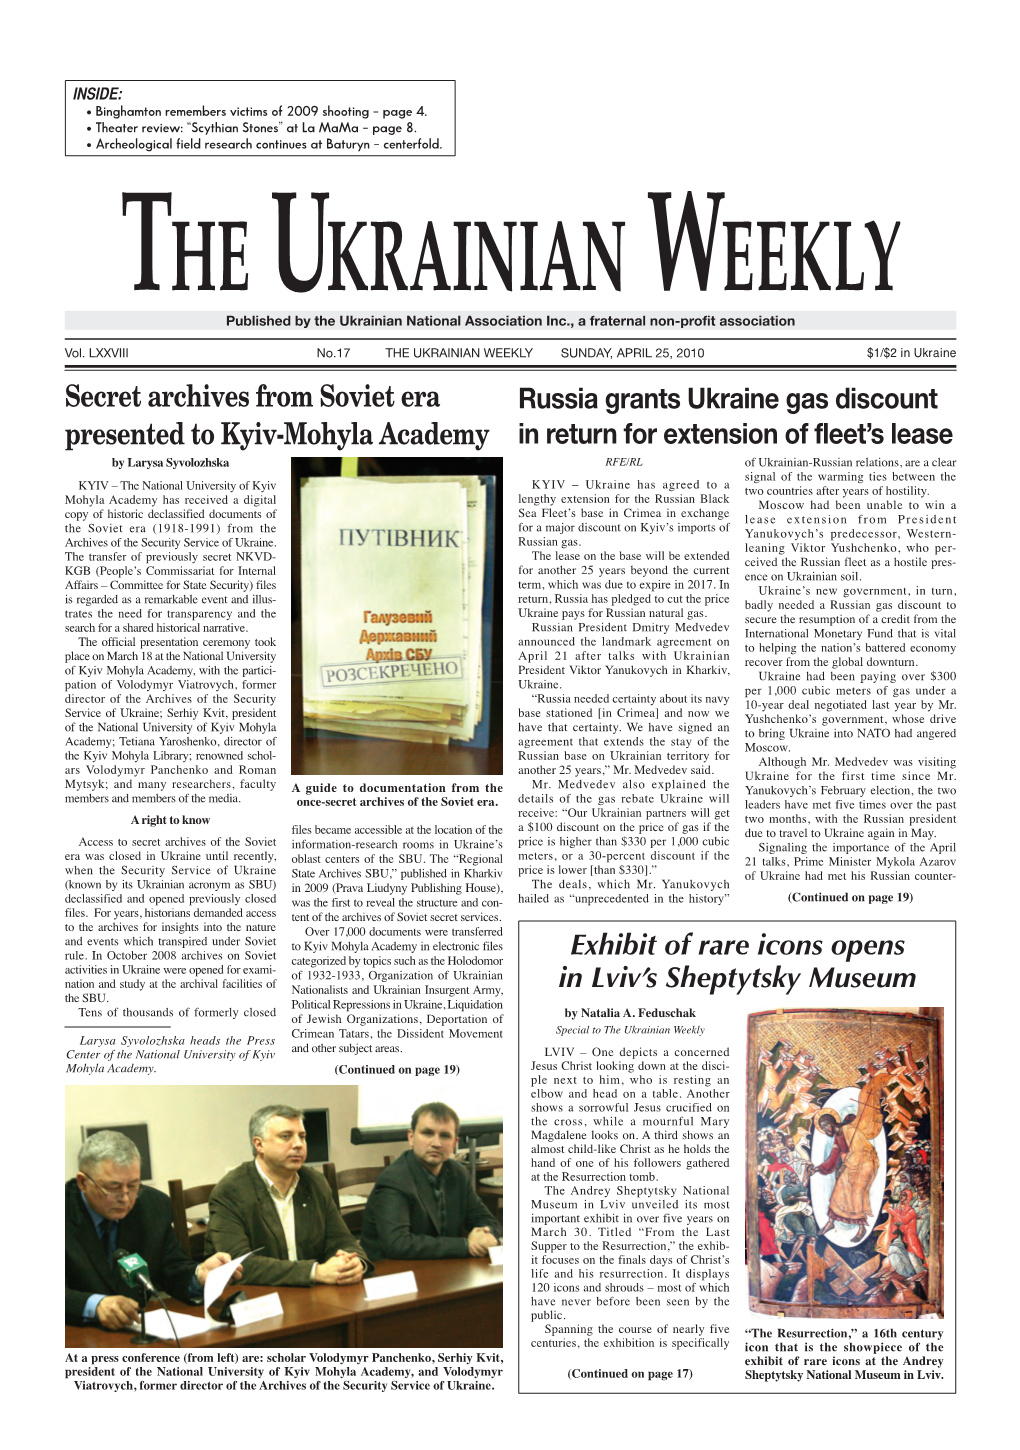 The Ukrainian Weekly 2010, No.17